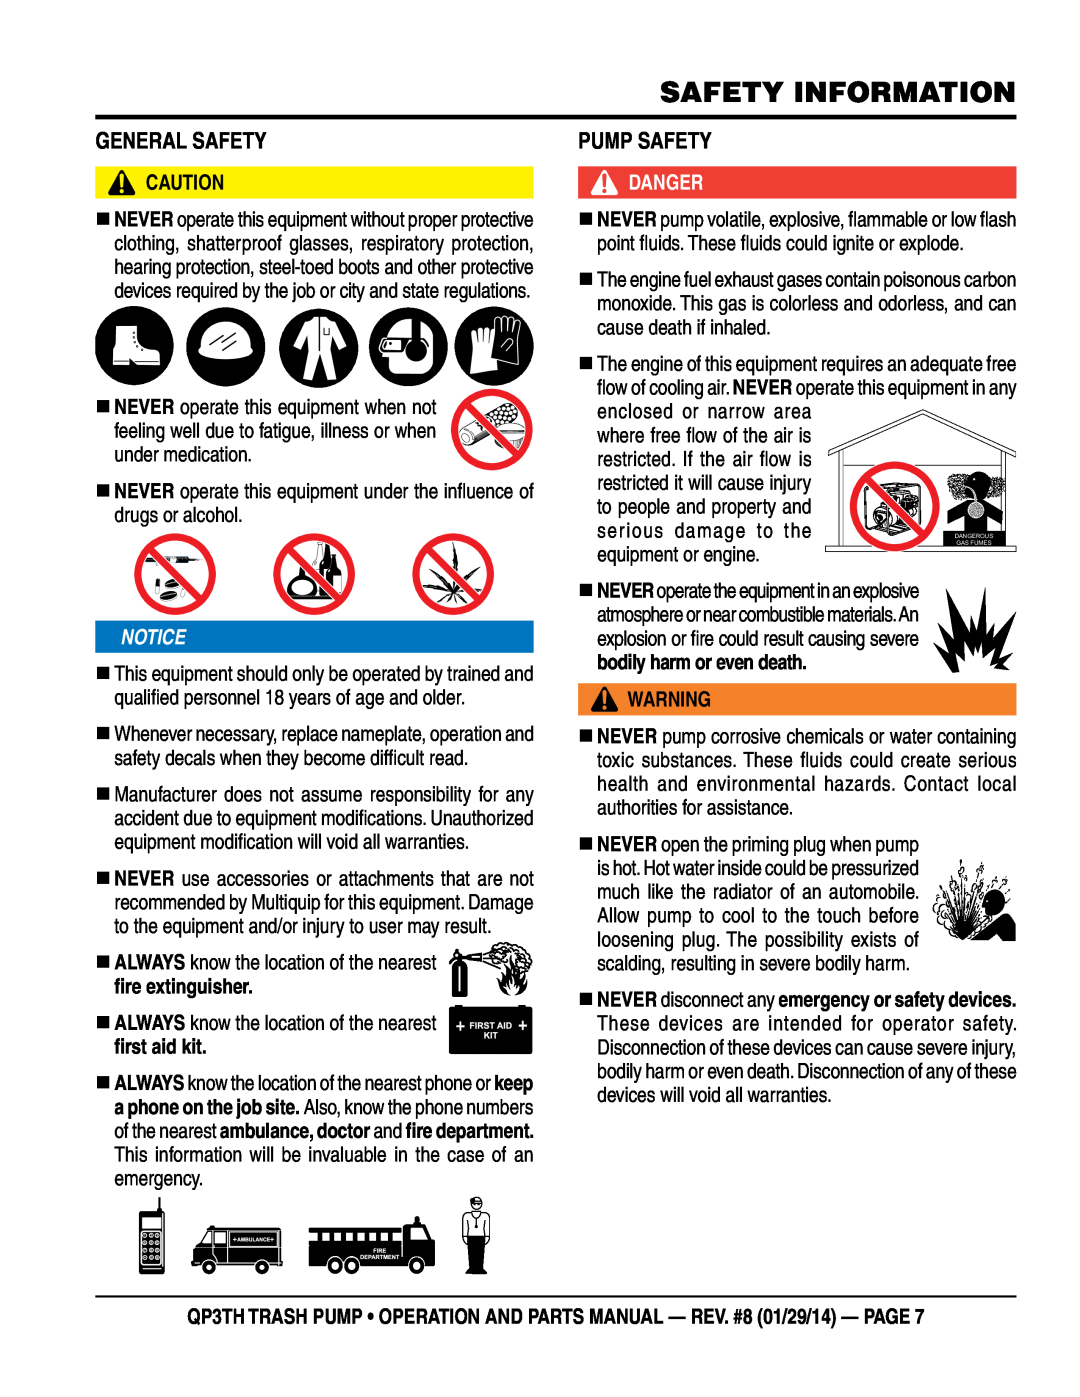 Multiquip QP3TH manual General Safety, Pump Safety, Safety Information, Danger 